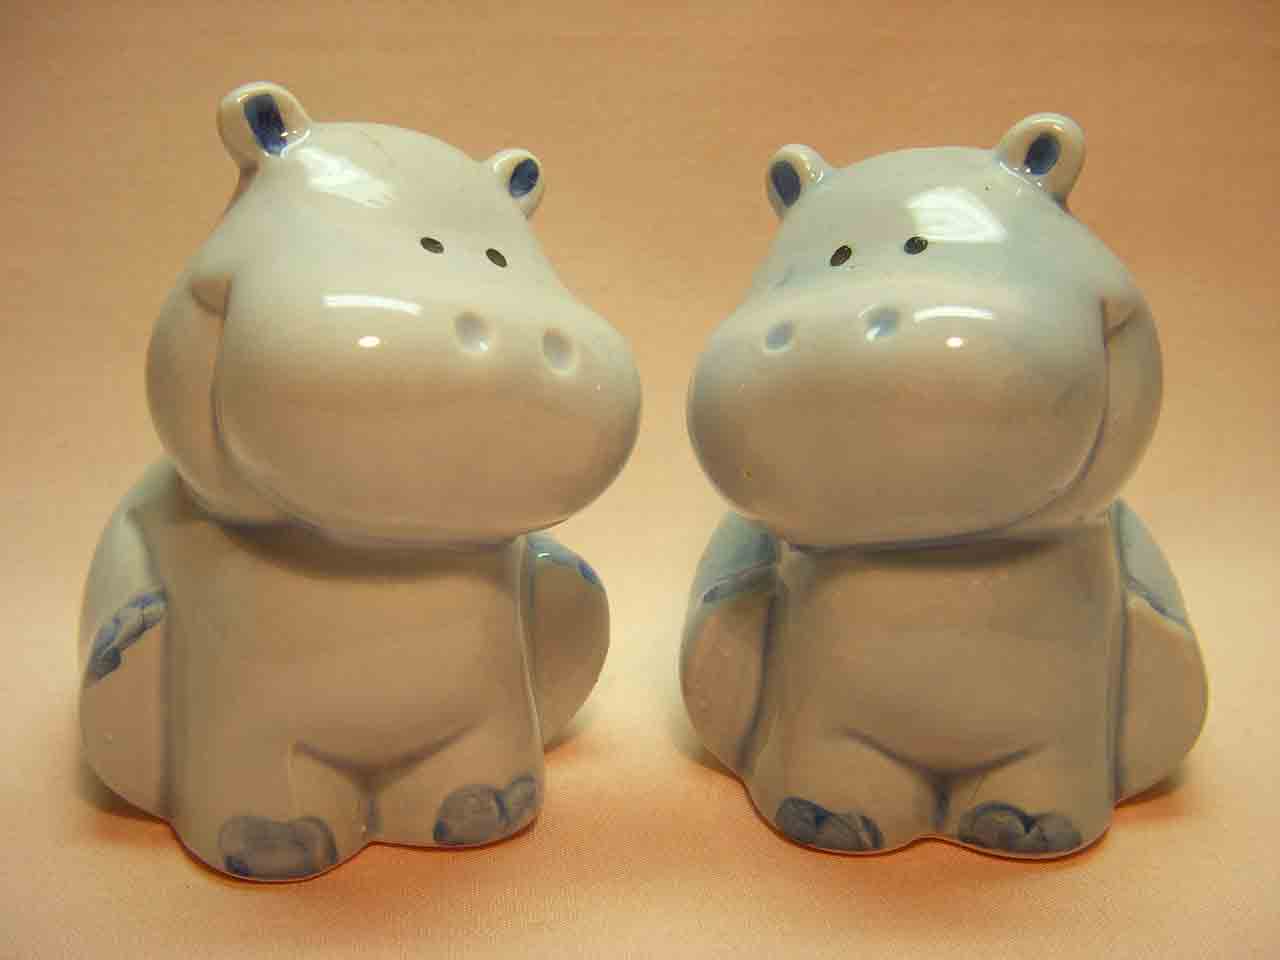 Josef Original animals salt and pepper shakers series - hippos